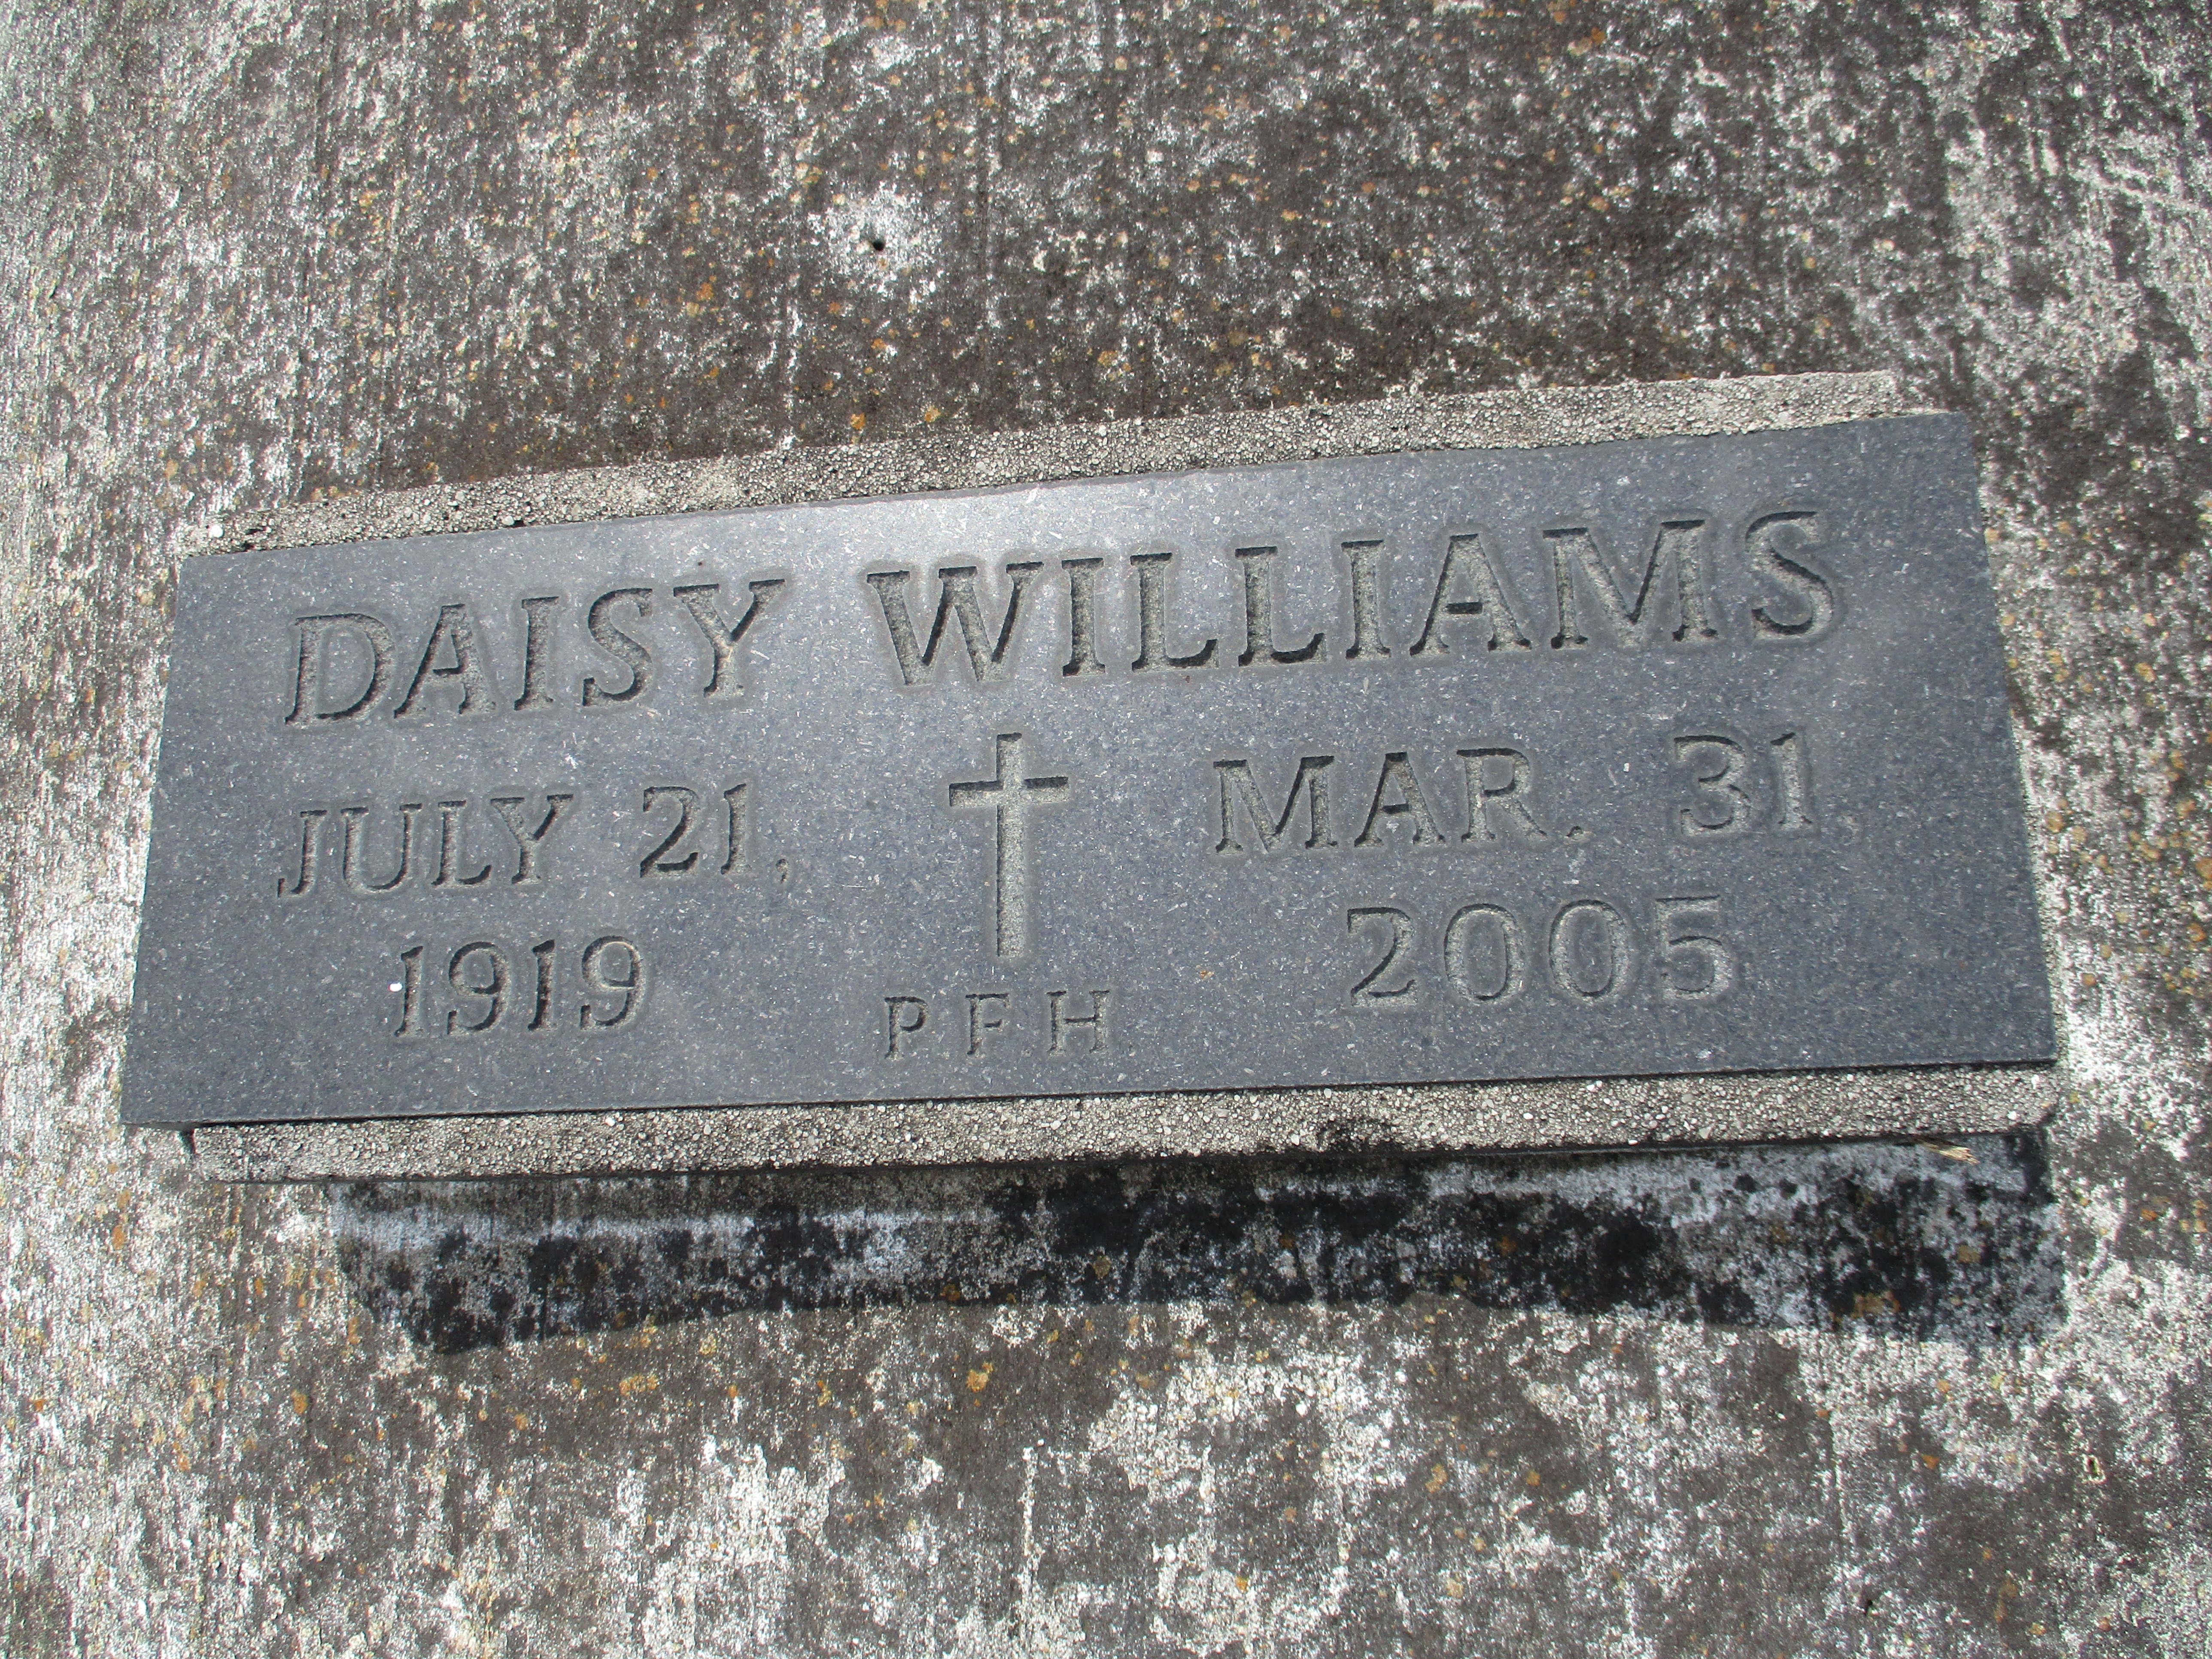 Daisy Williams